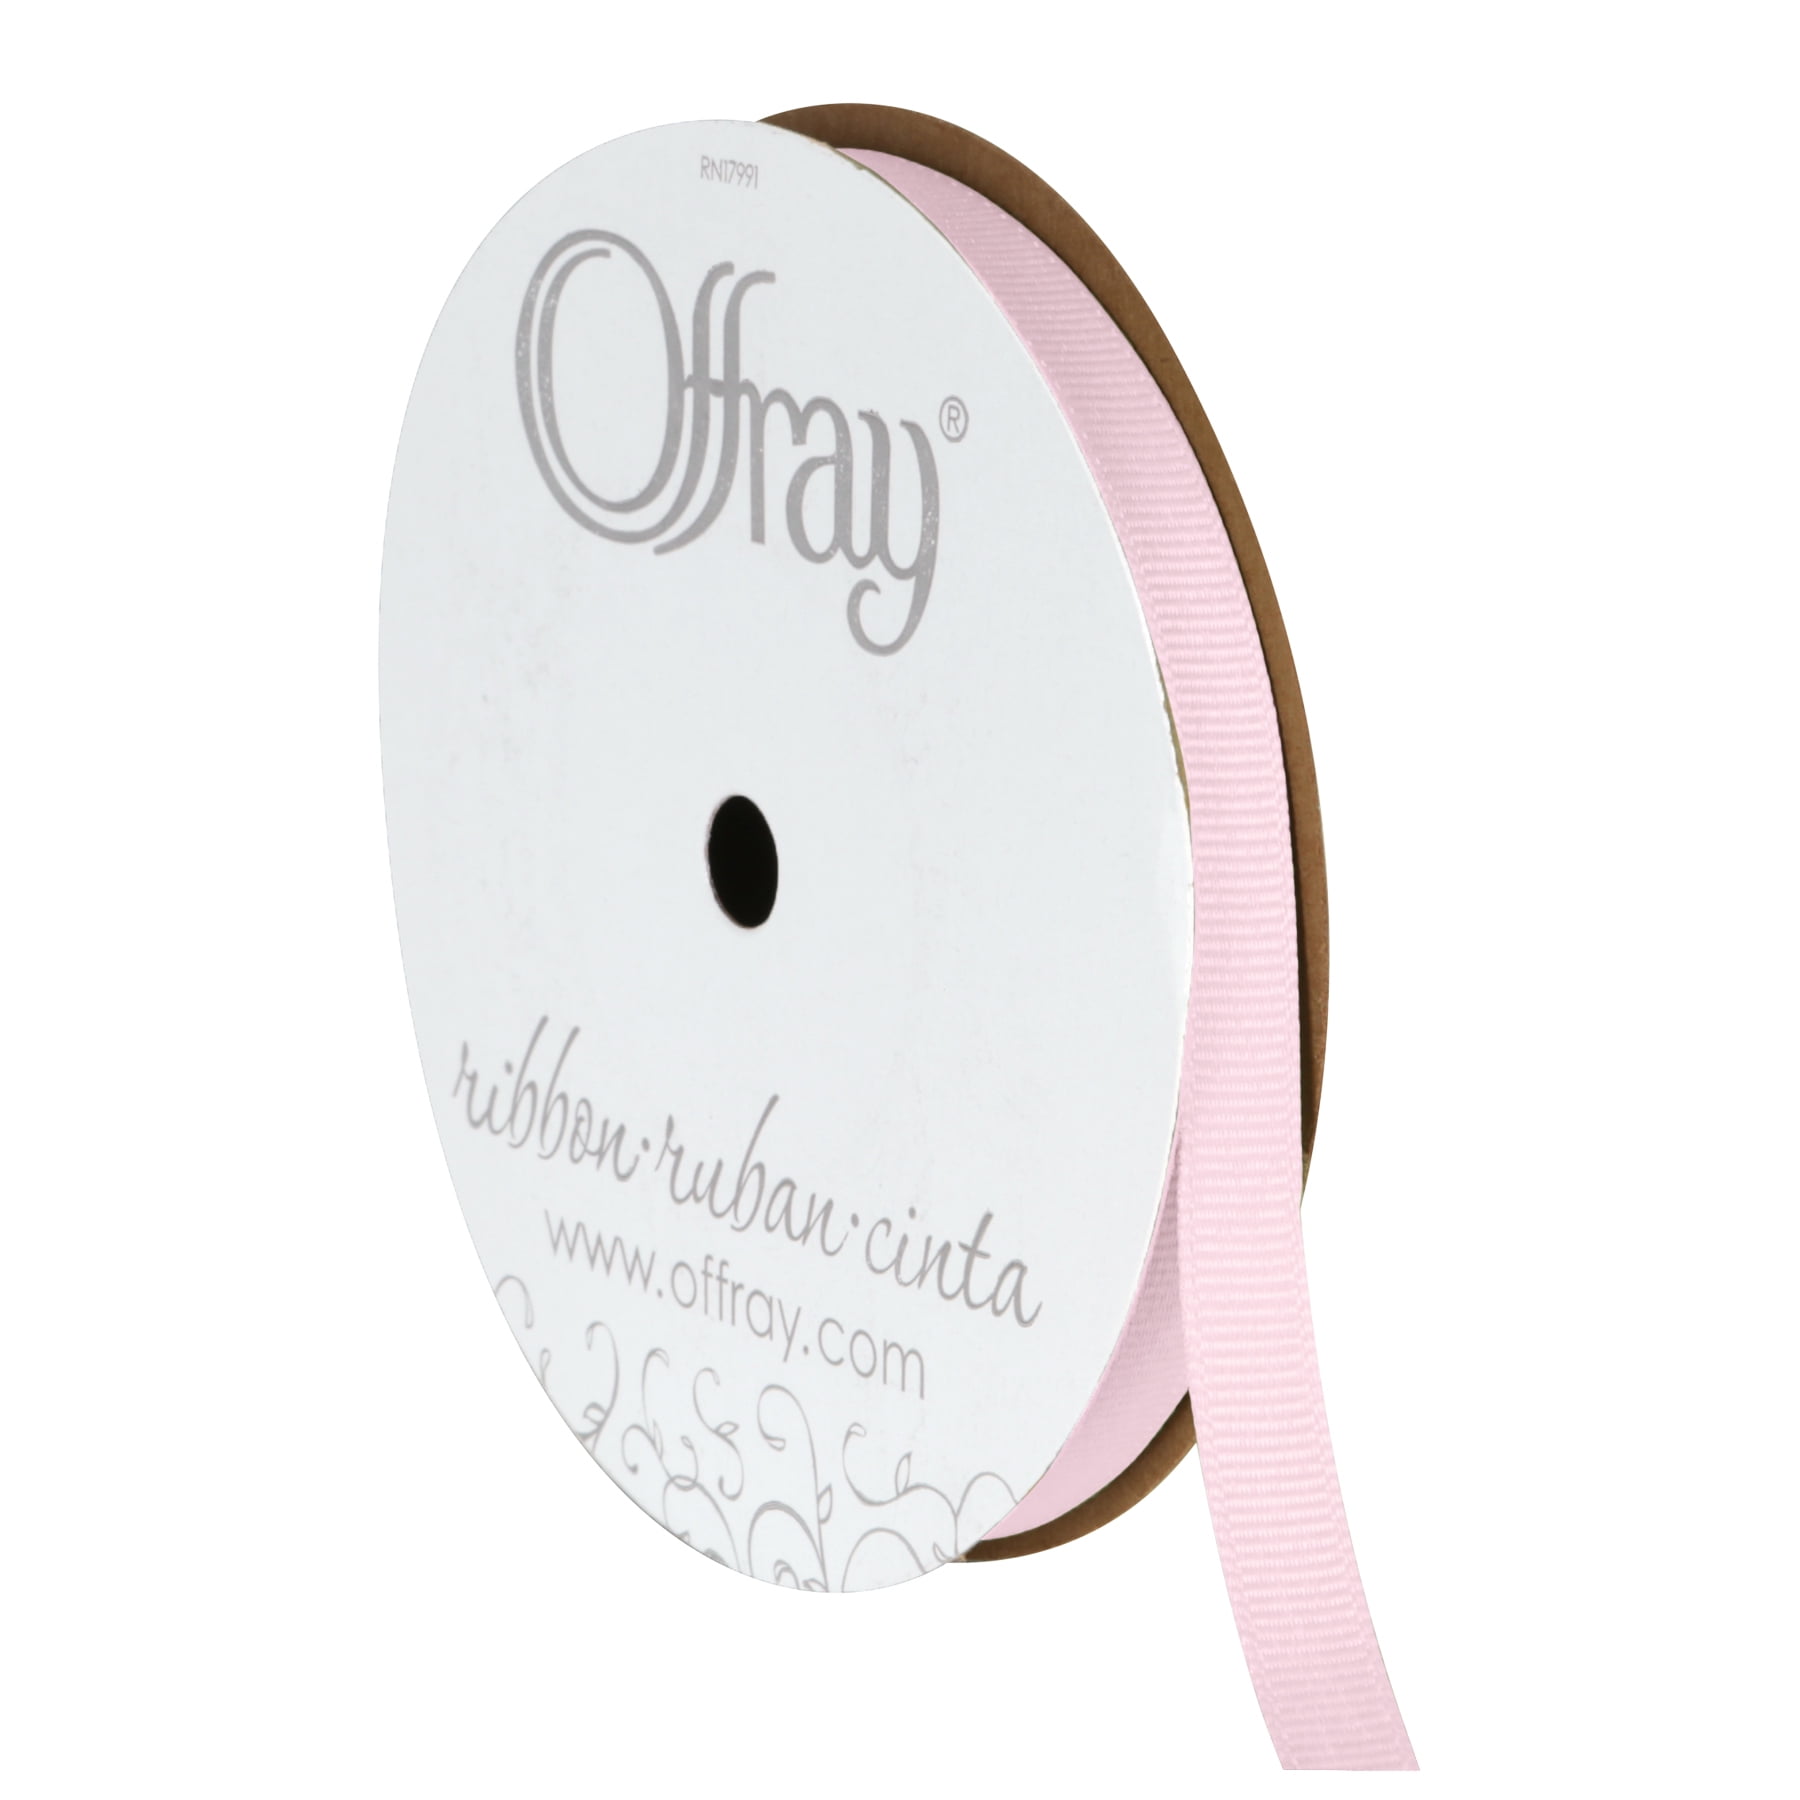 Offray Ribbon, Carnation Pink 3/8 inch Grosgrain Polyester Ribbon, 18 feet